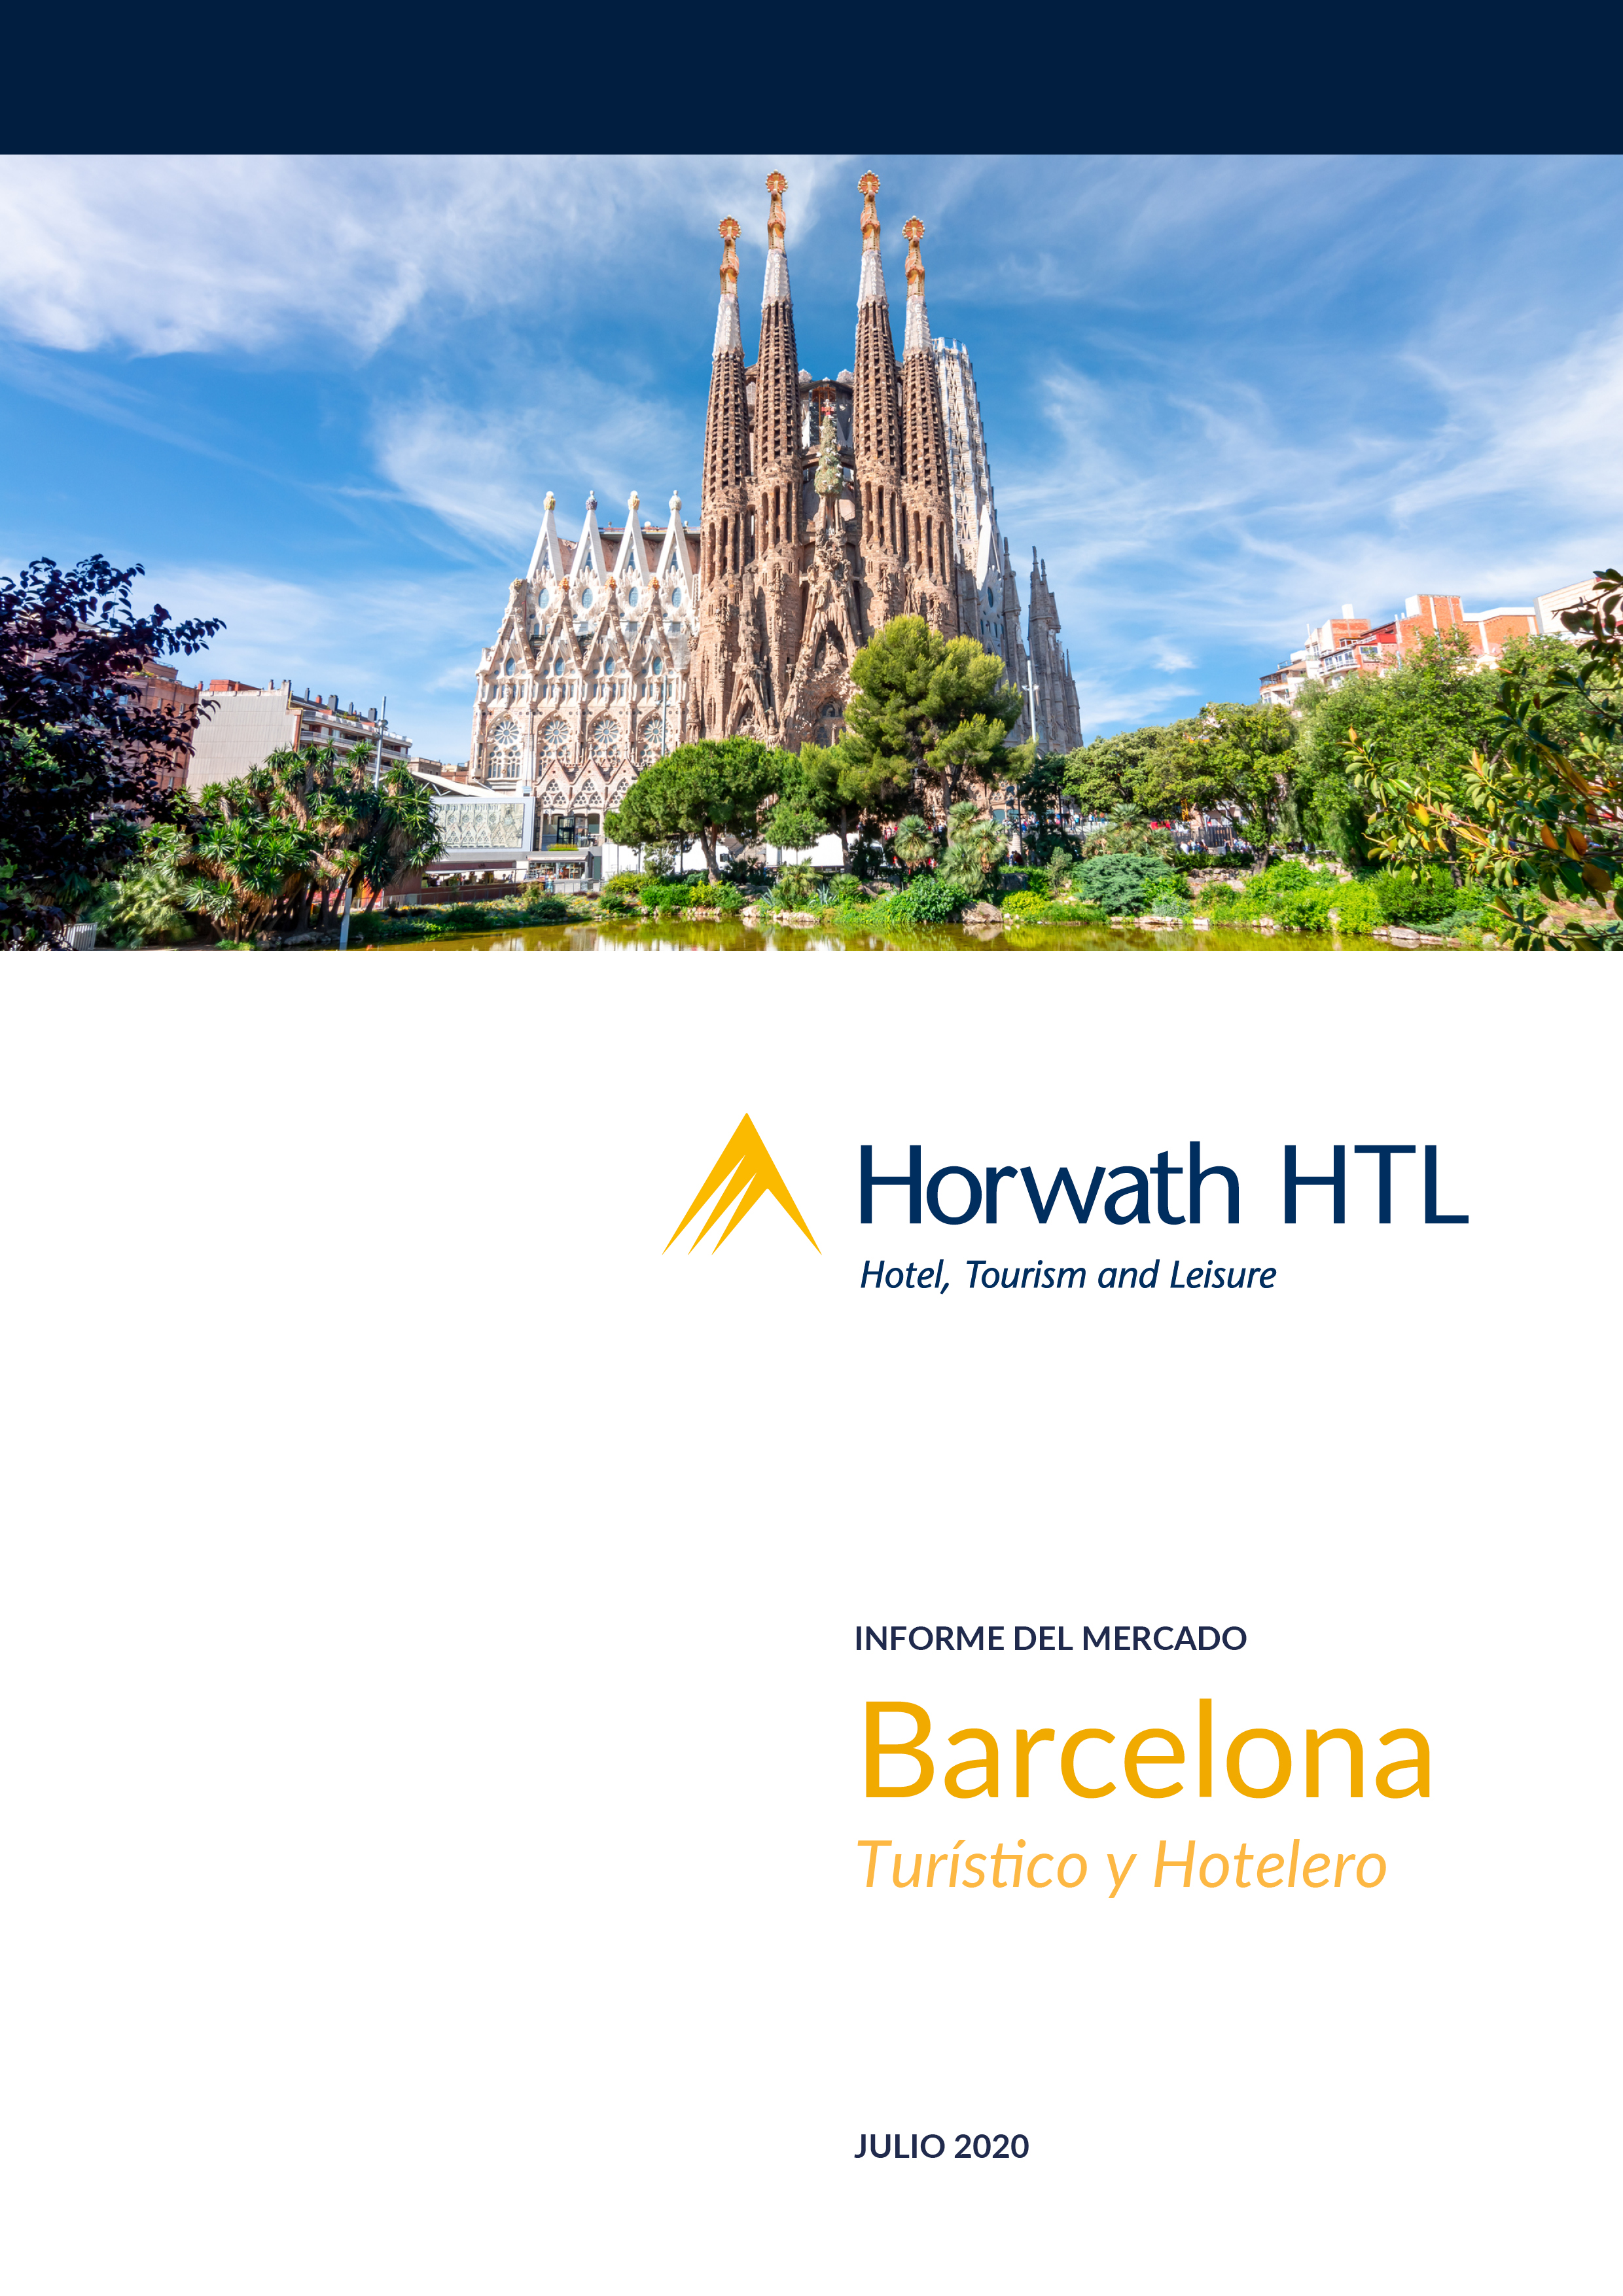 Barcelona: Hotel & Tourism Market update